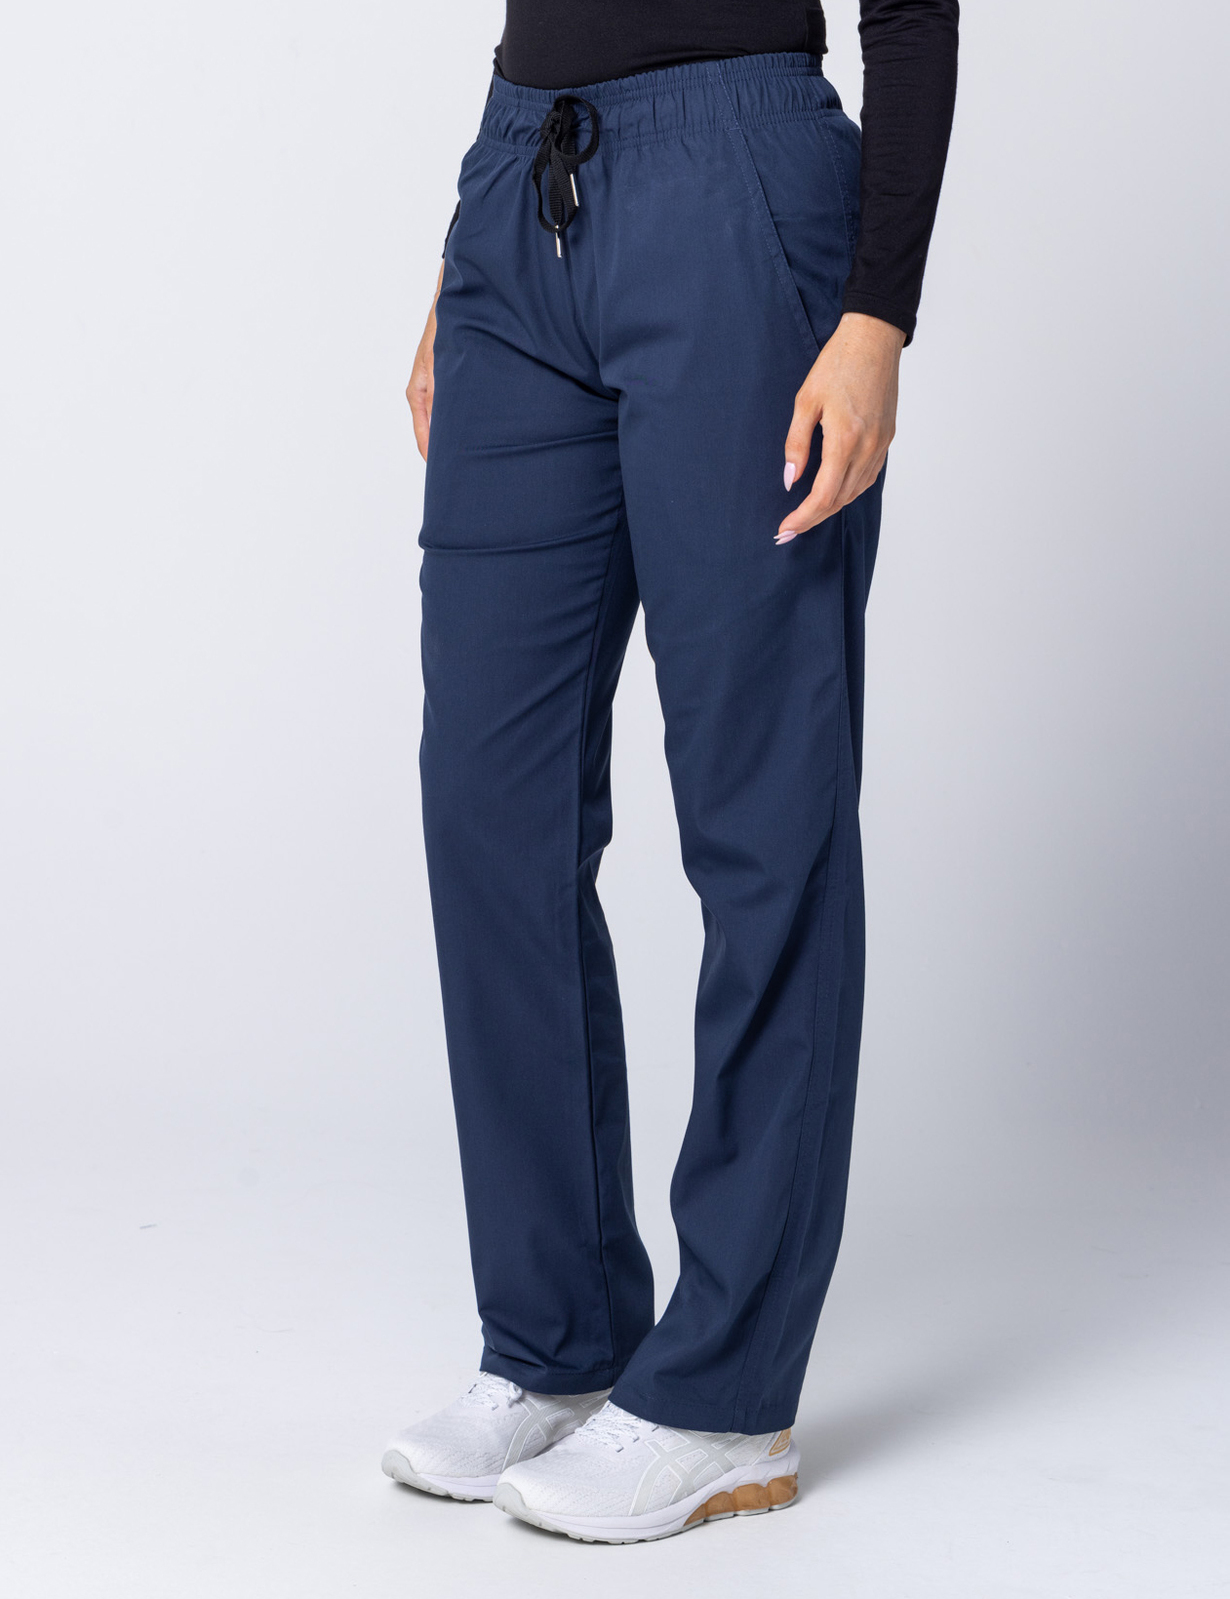 Women's Regular Cut Pants - Navy - Medium